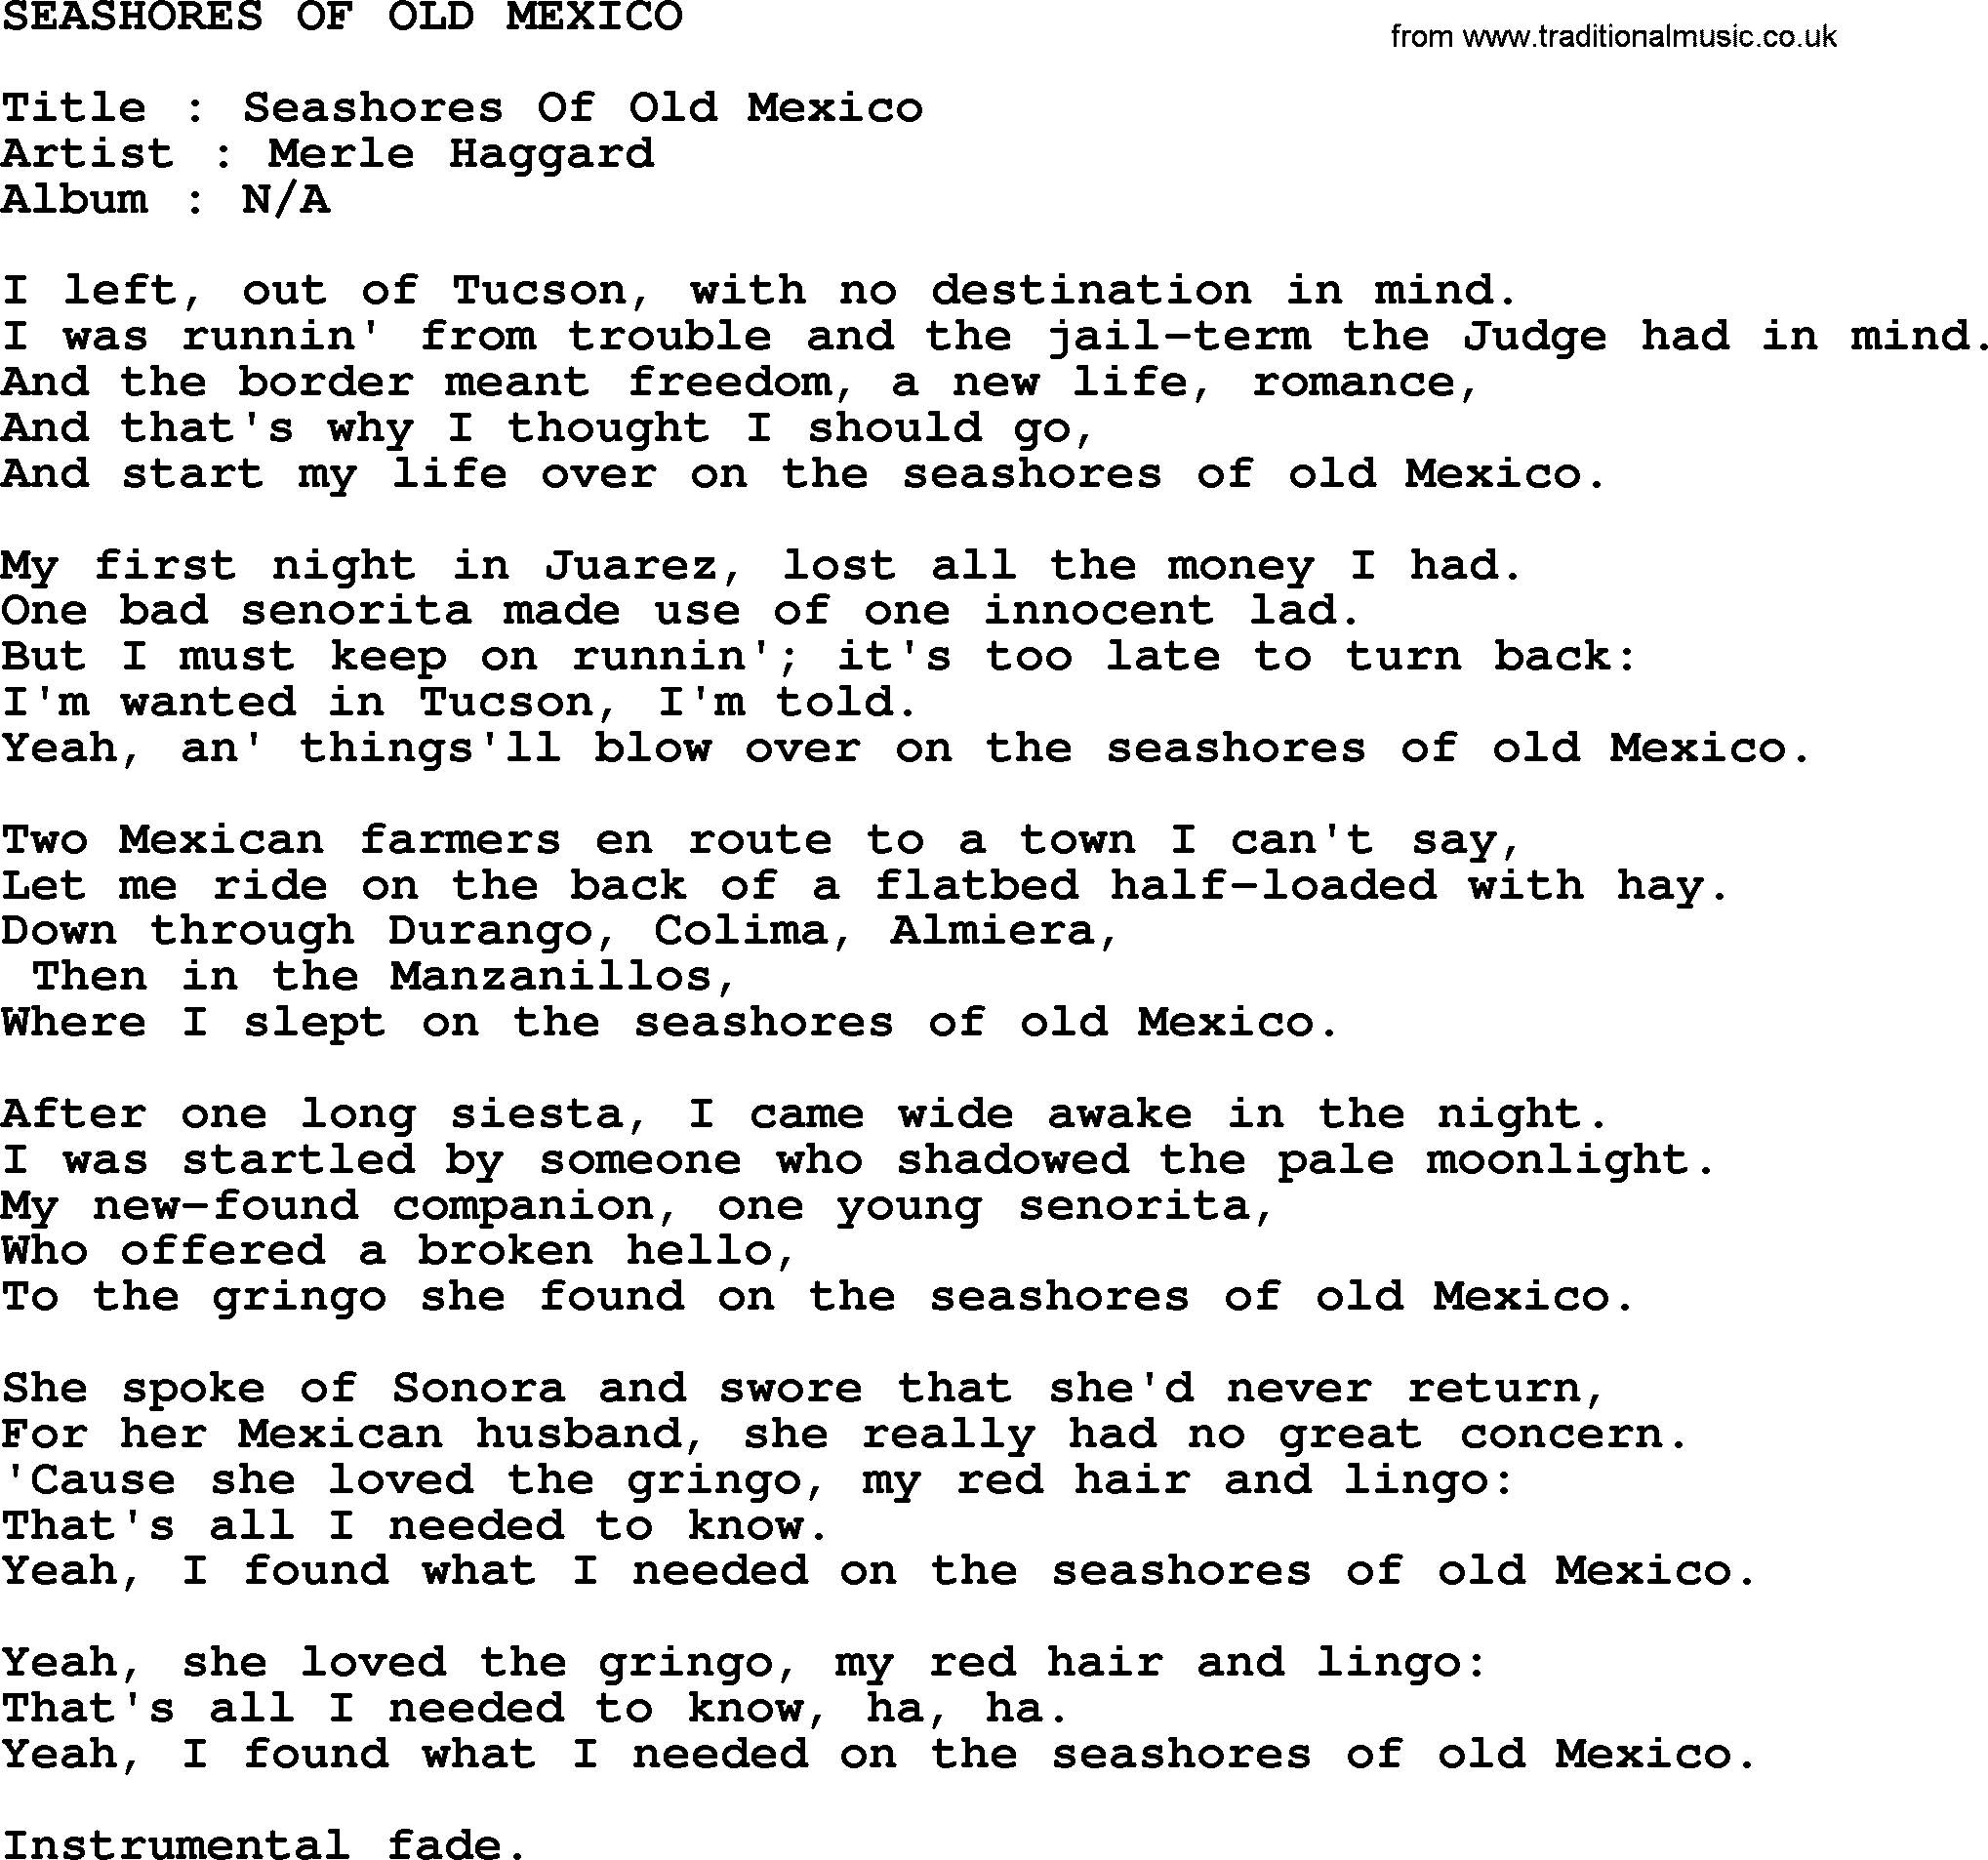 Merle Haggard song: Seashores Of Old Mexico, lyrics.